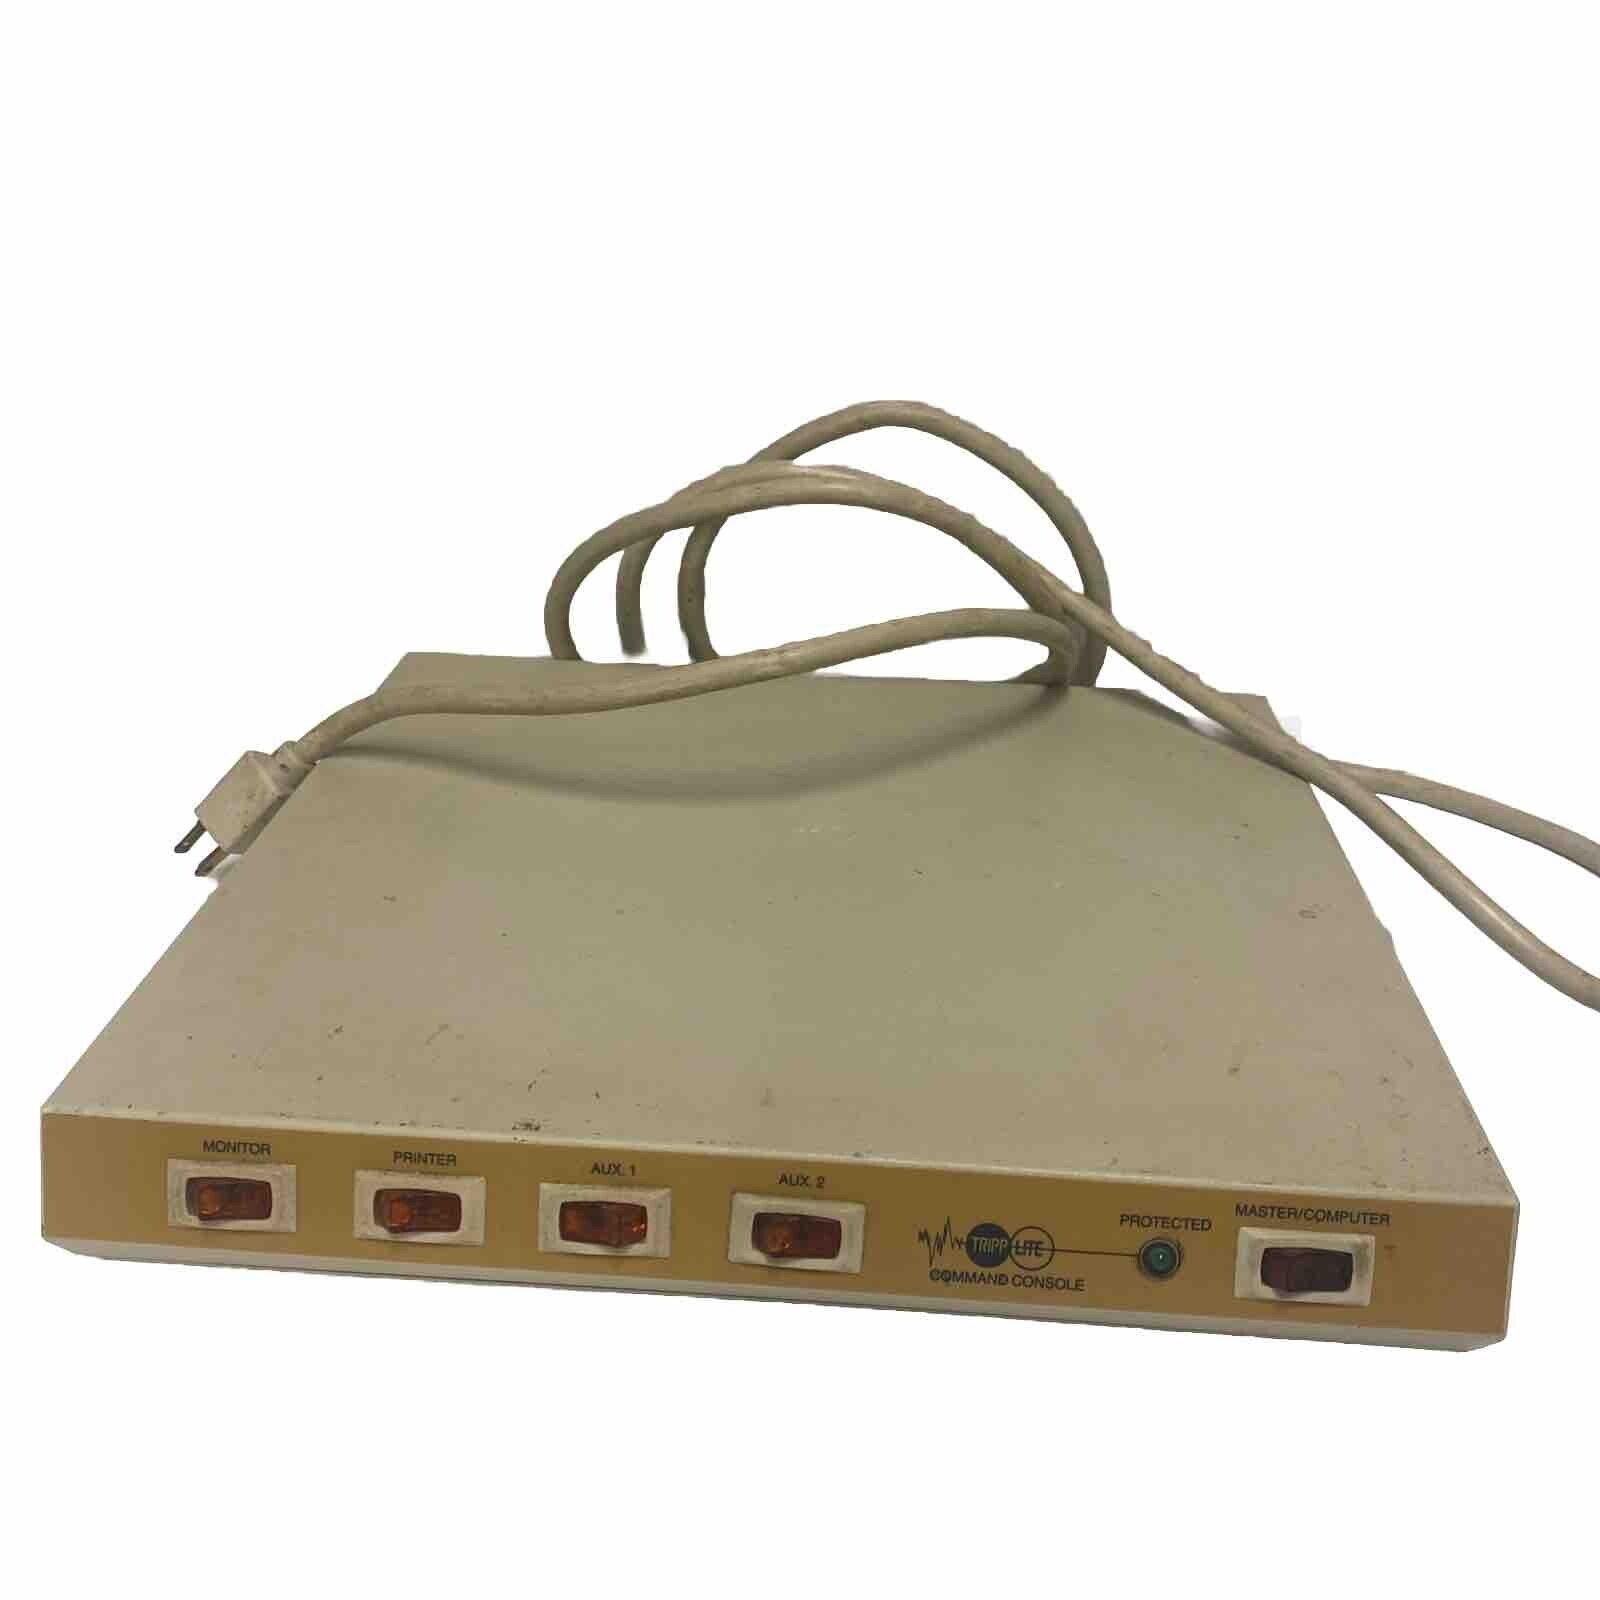 VTG Tripp Lite Command Console Model CCI Plus vintage 6 outlet tested working